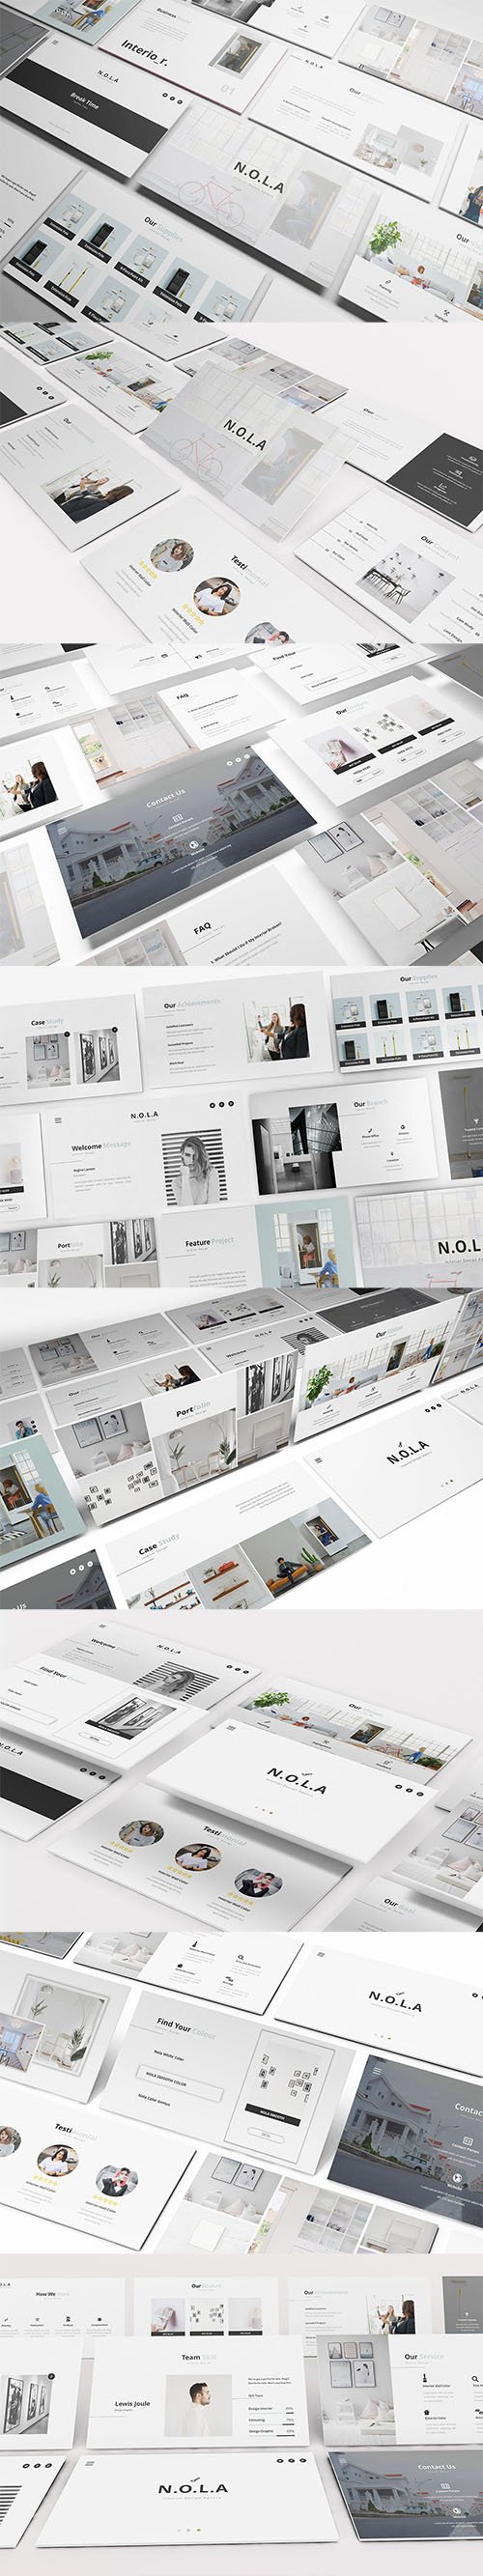 Nola Interior Design Powerpoint, Keynote and Google Slides Templates